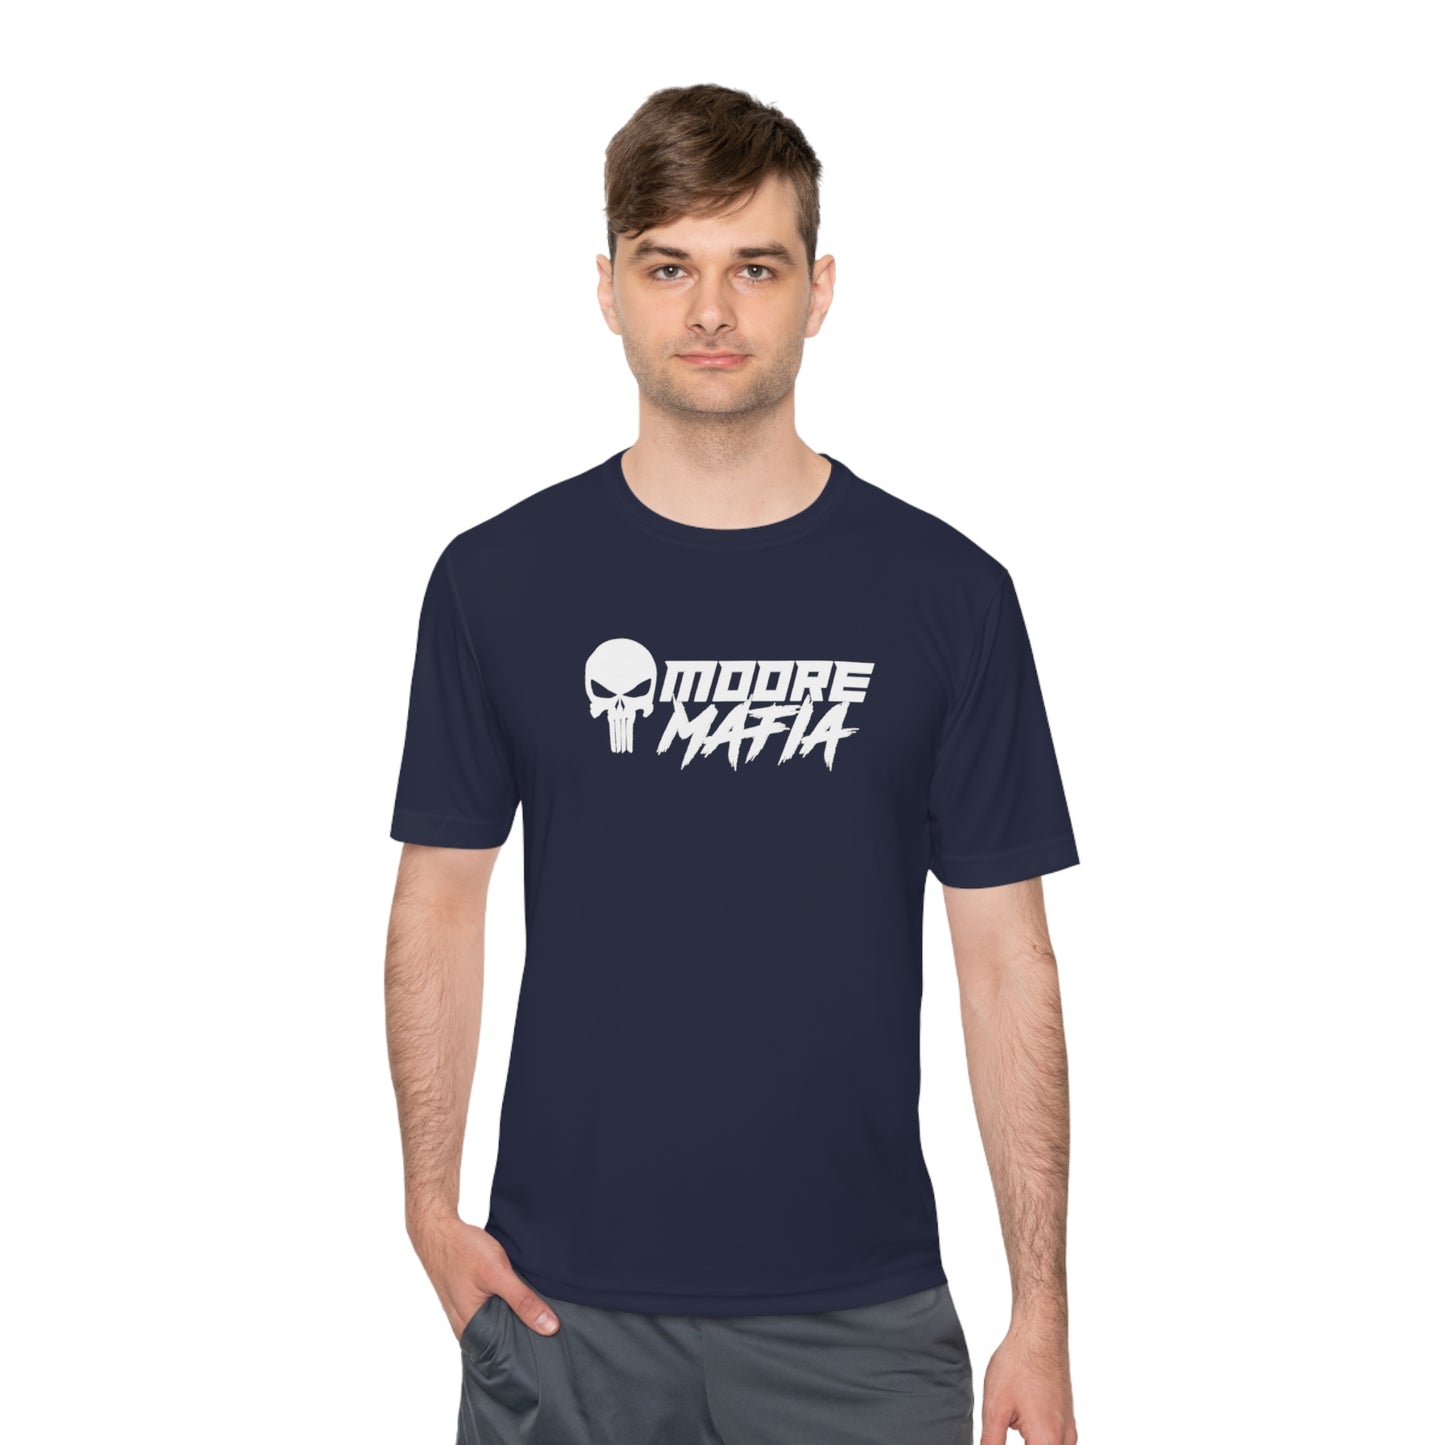 Man Down Unisex Moisture Wicking T-Shirt